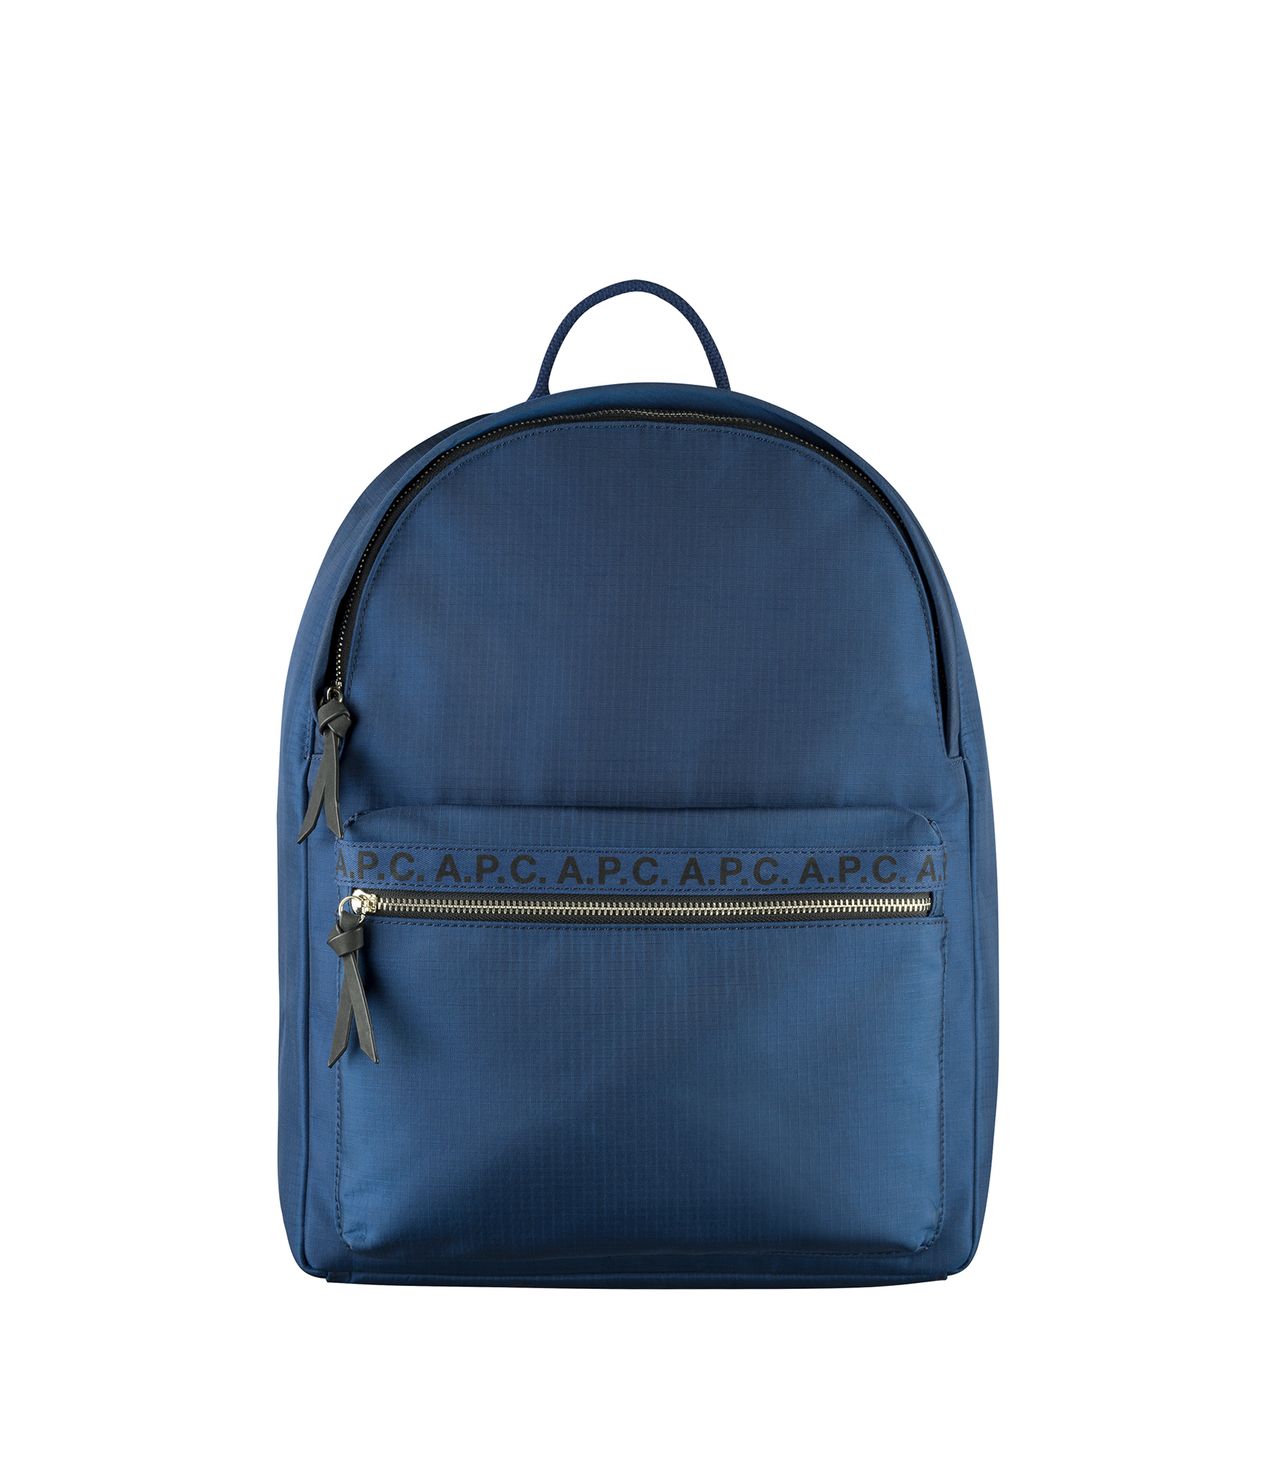 Marc backpack NAVY BLUE APC